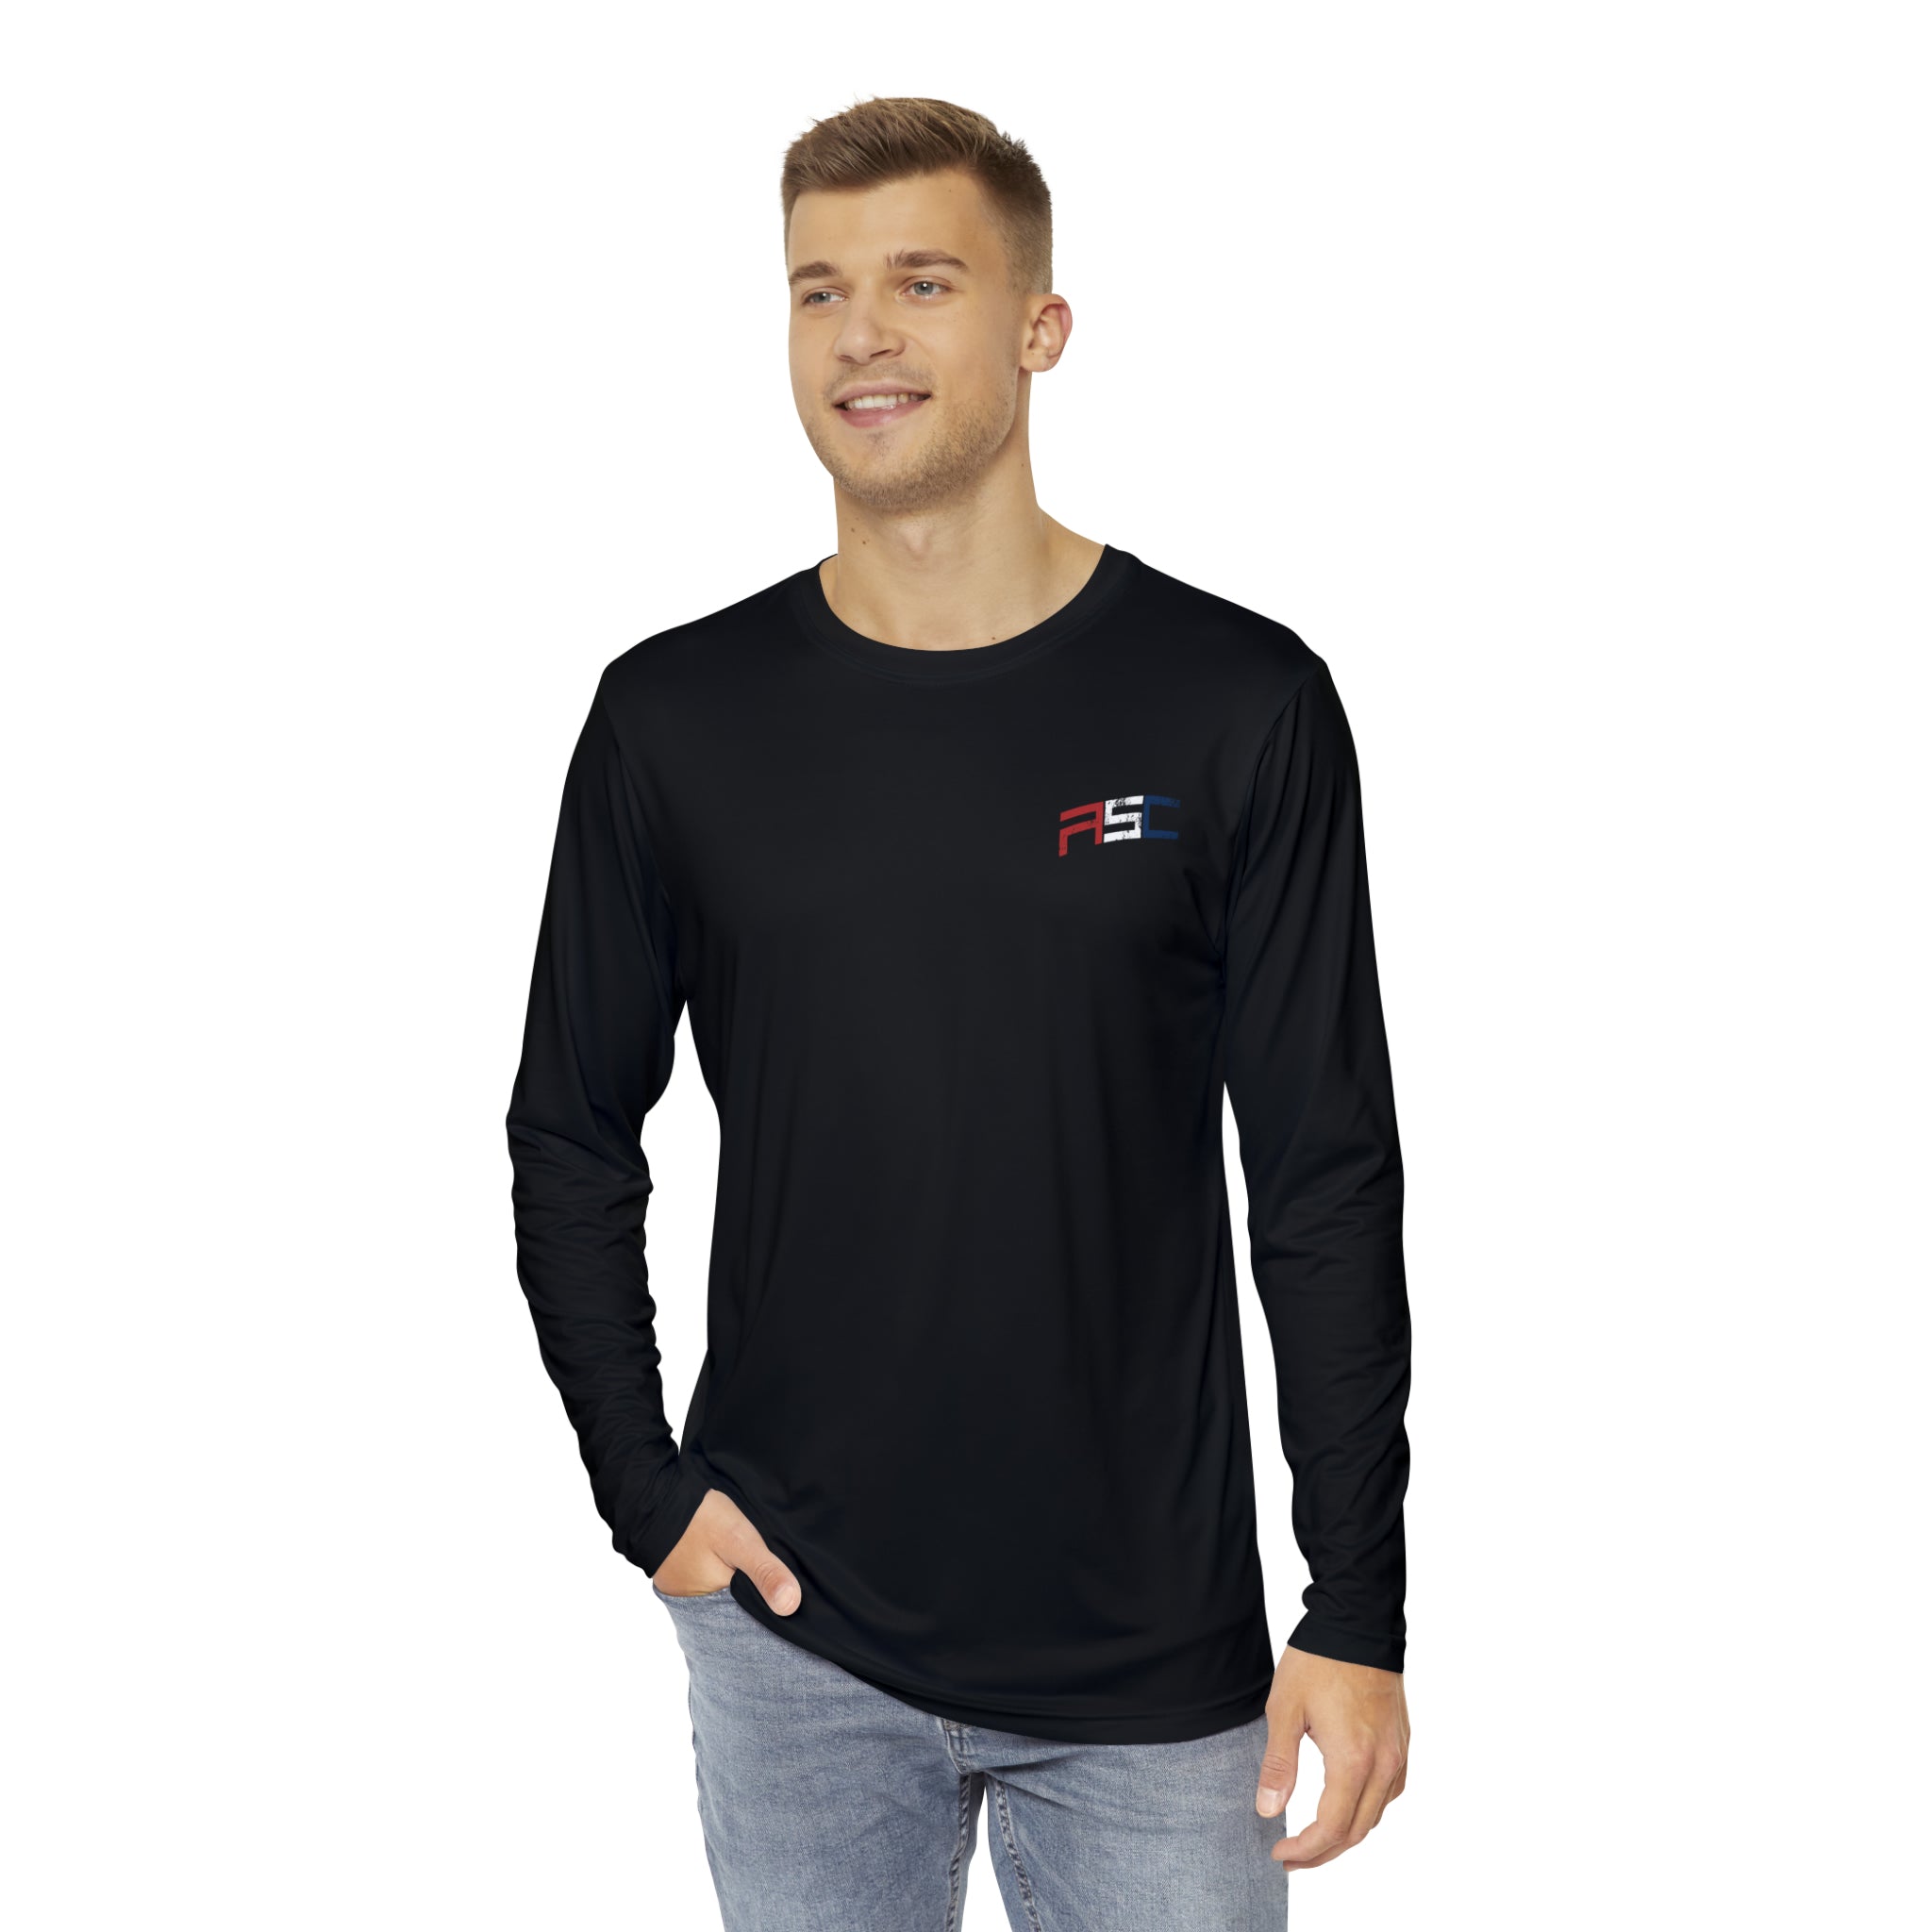 Men's Performance FL Long Sleeve Shirt Black